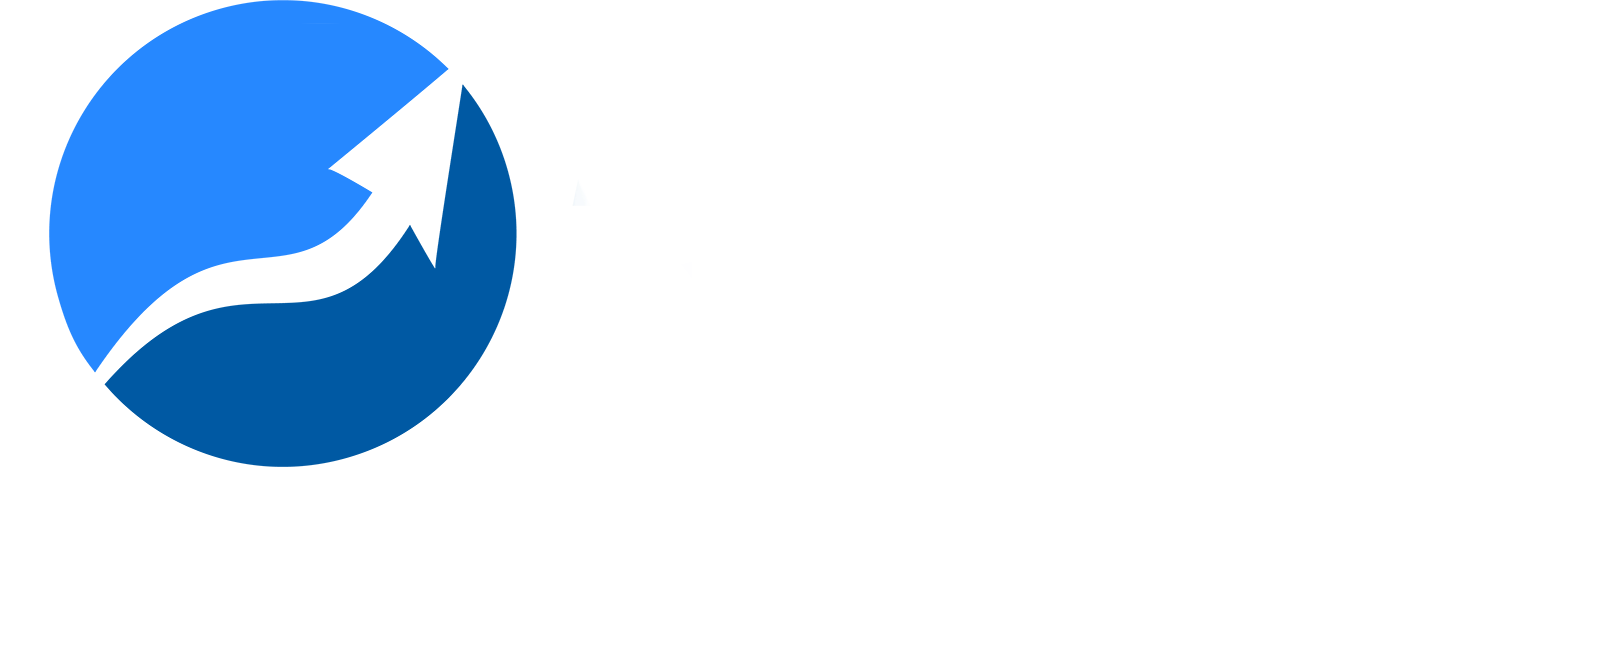 IMEX GROUP